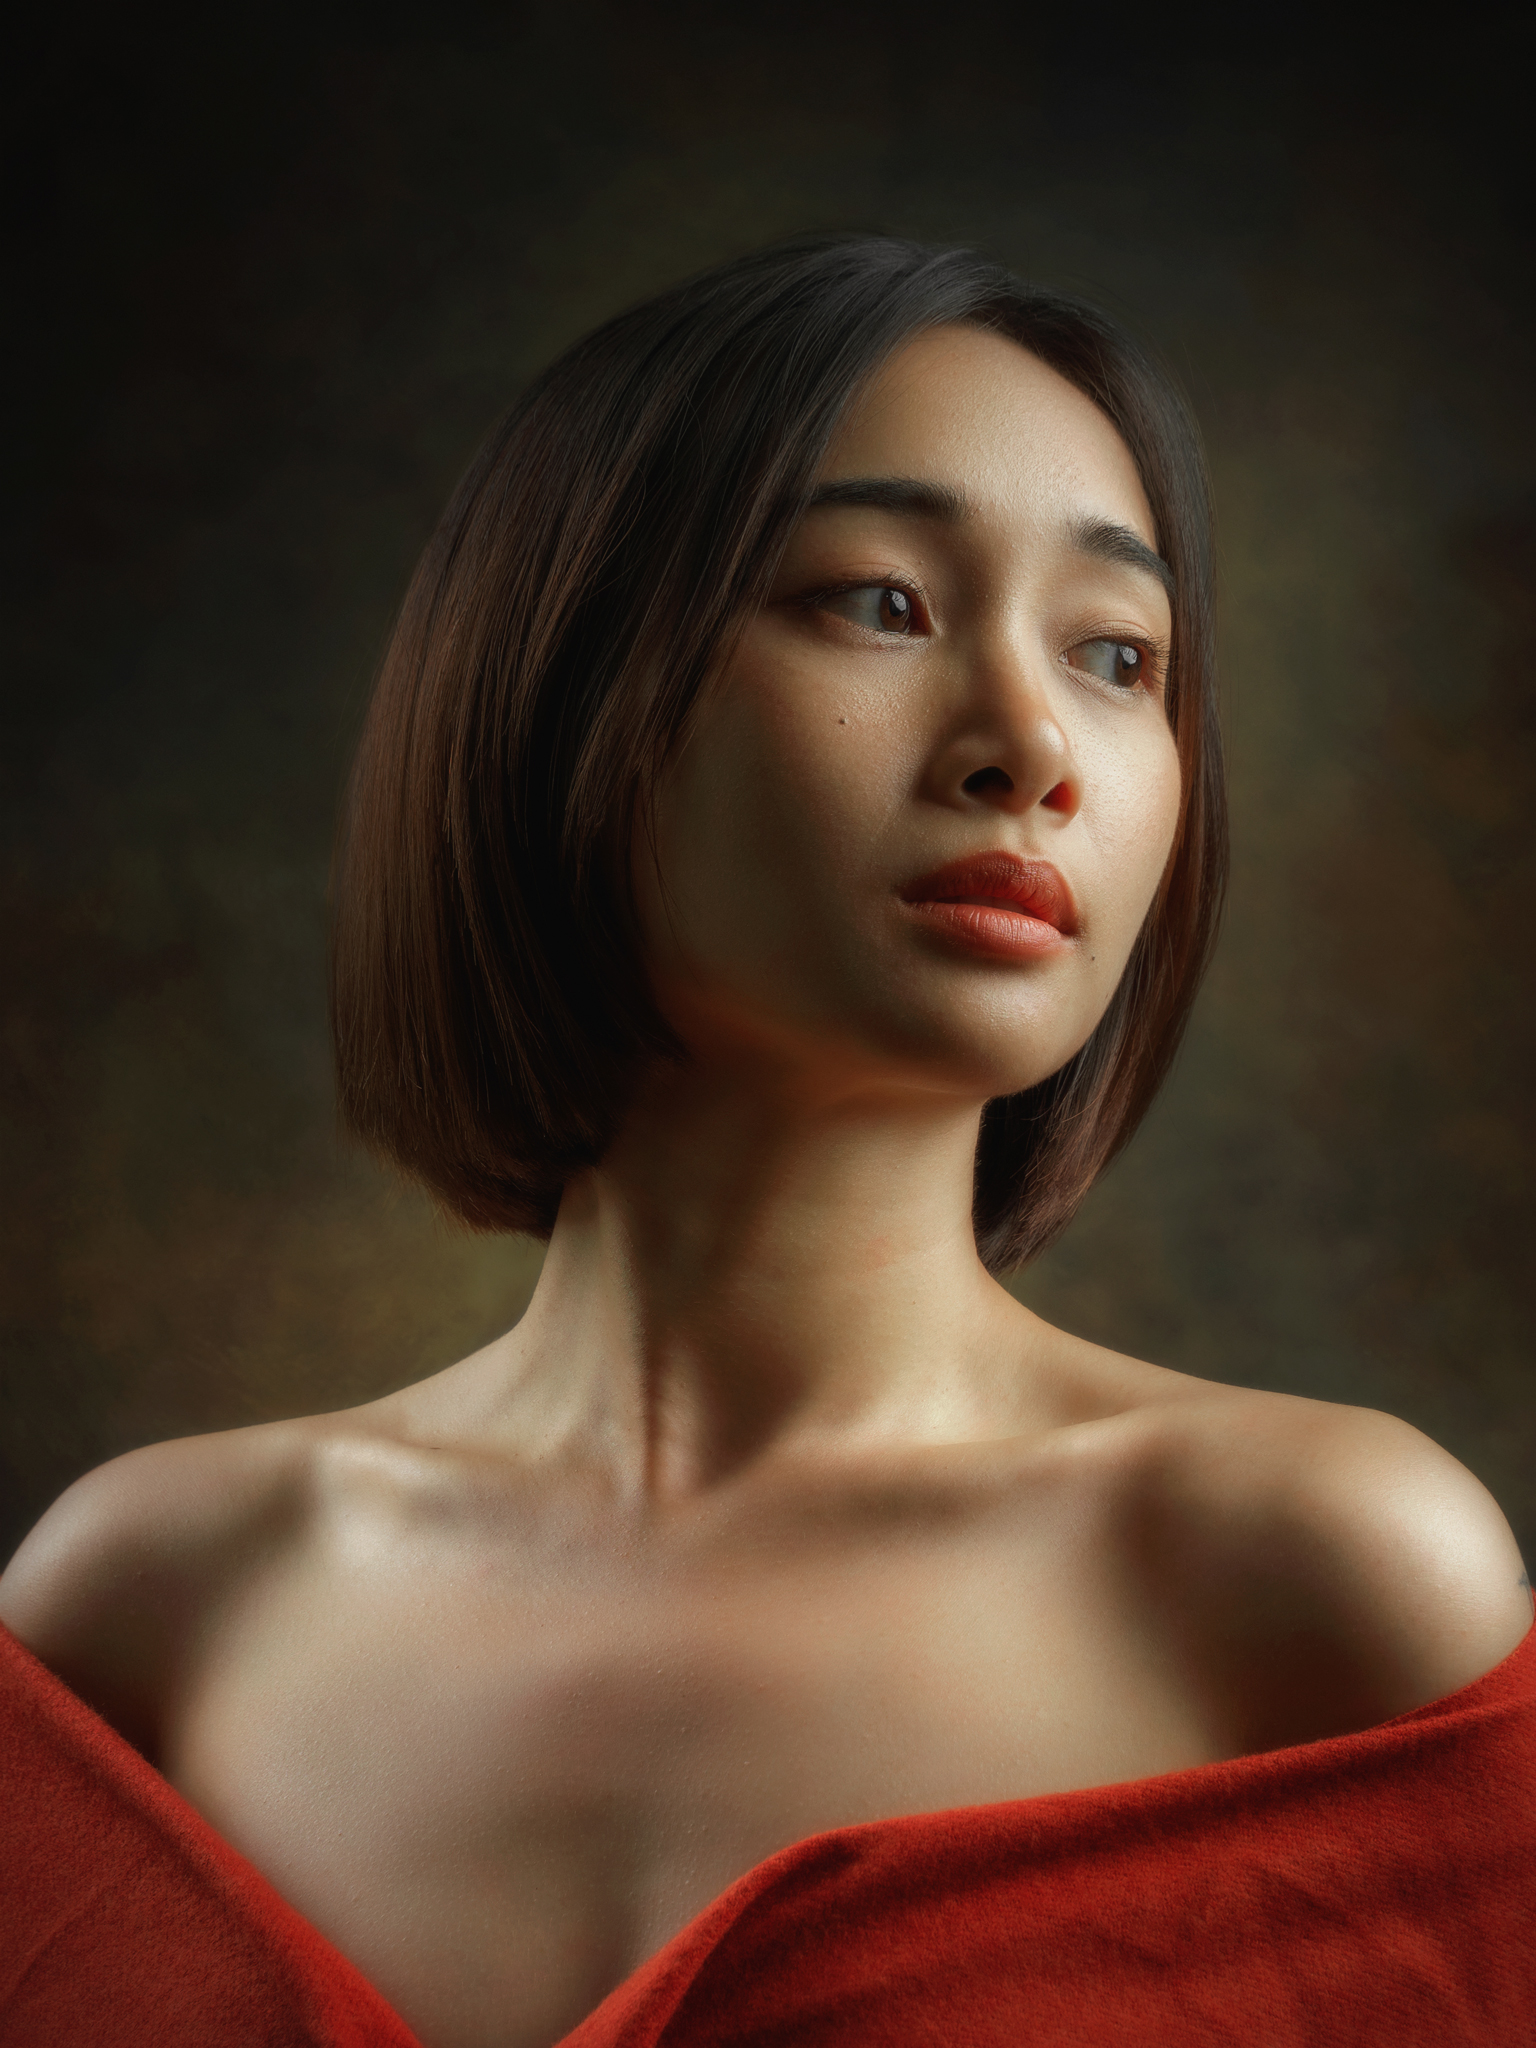 Hoang Nguyen Women Asian Bare Shoulders Looking Away Portrait 1536x2048